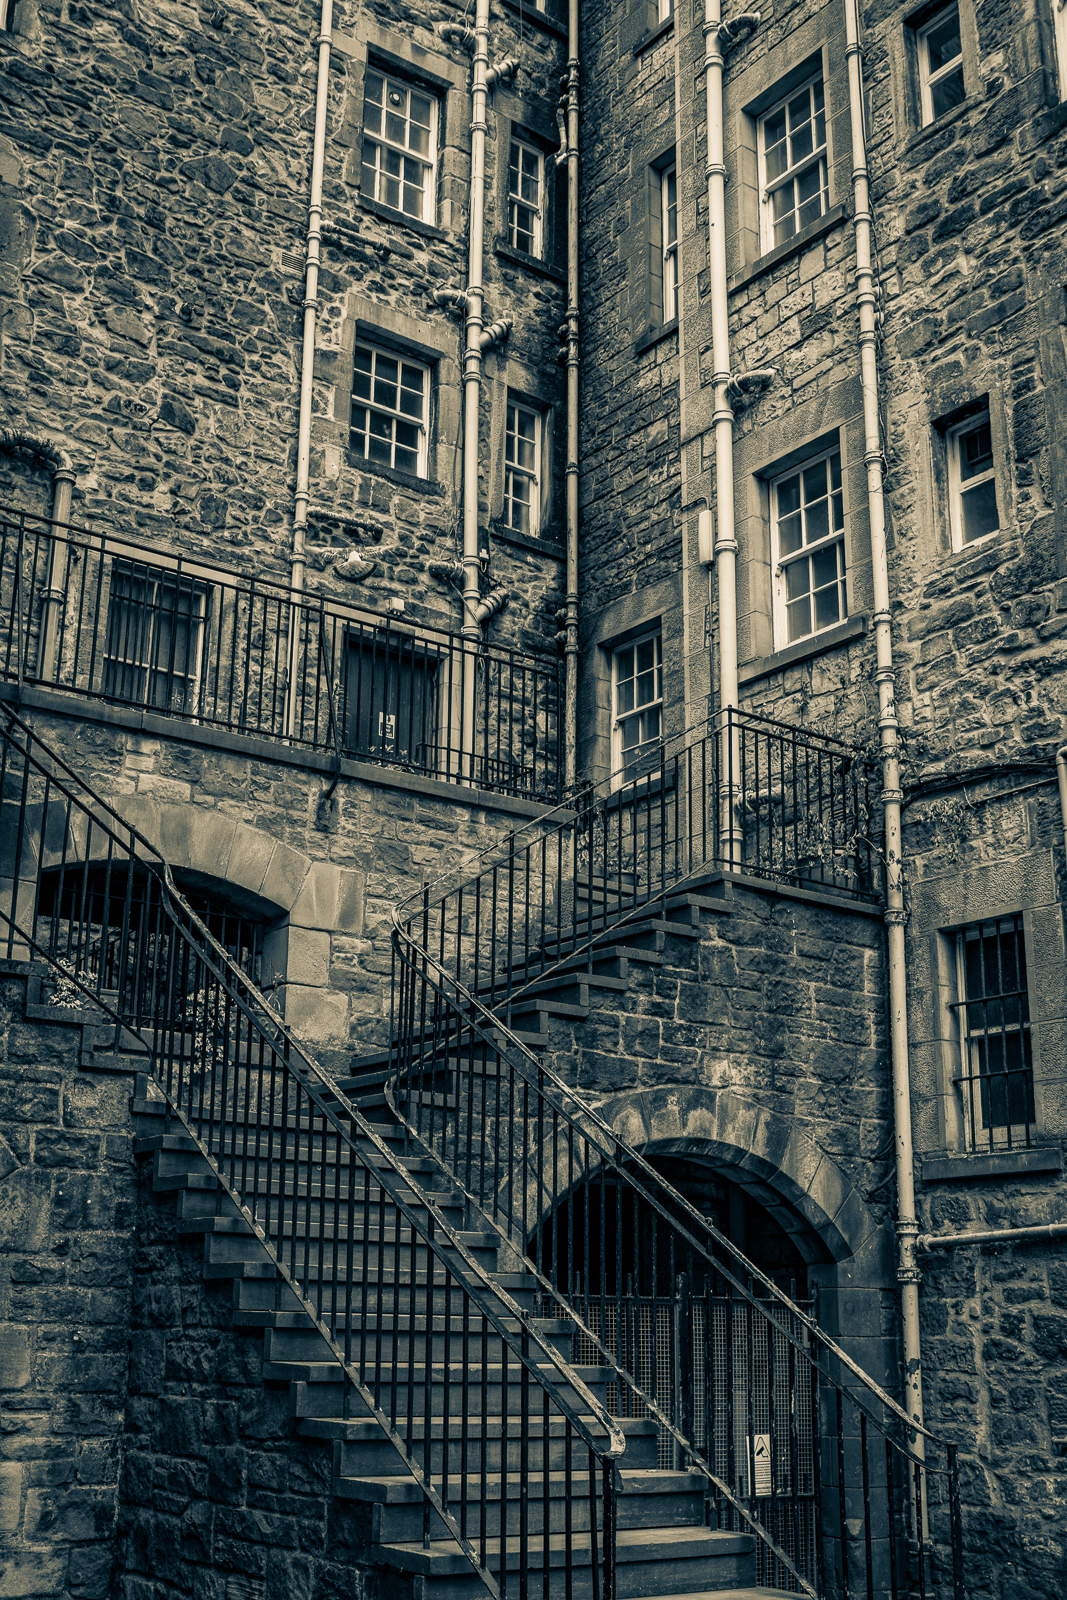 34. Makars Court Edinburgh by William Waugh LRPS